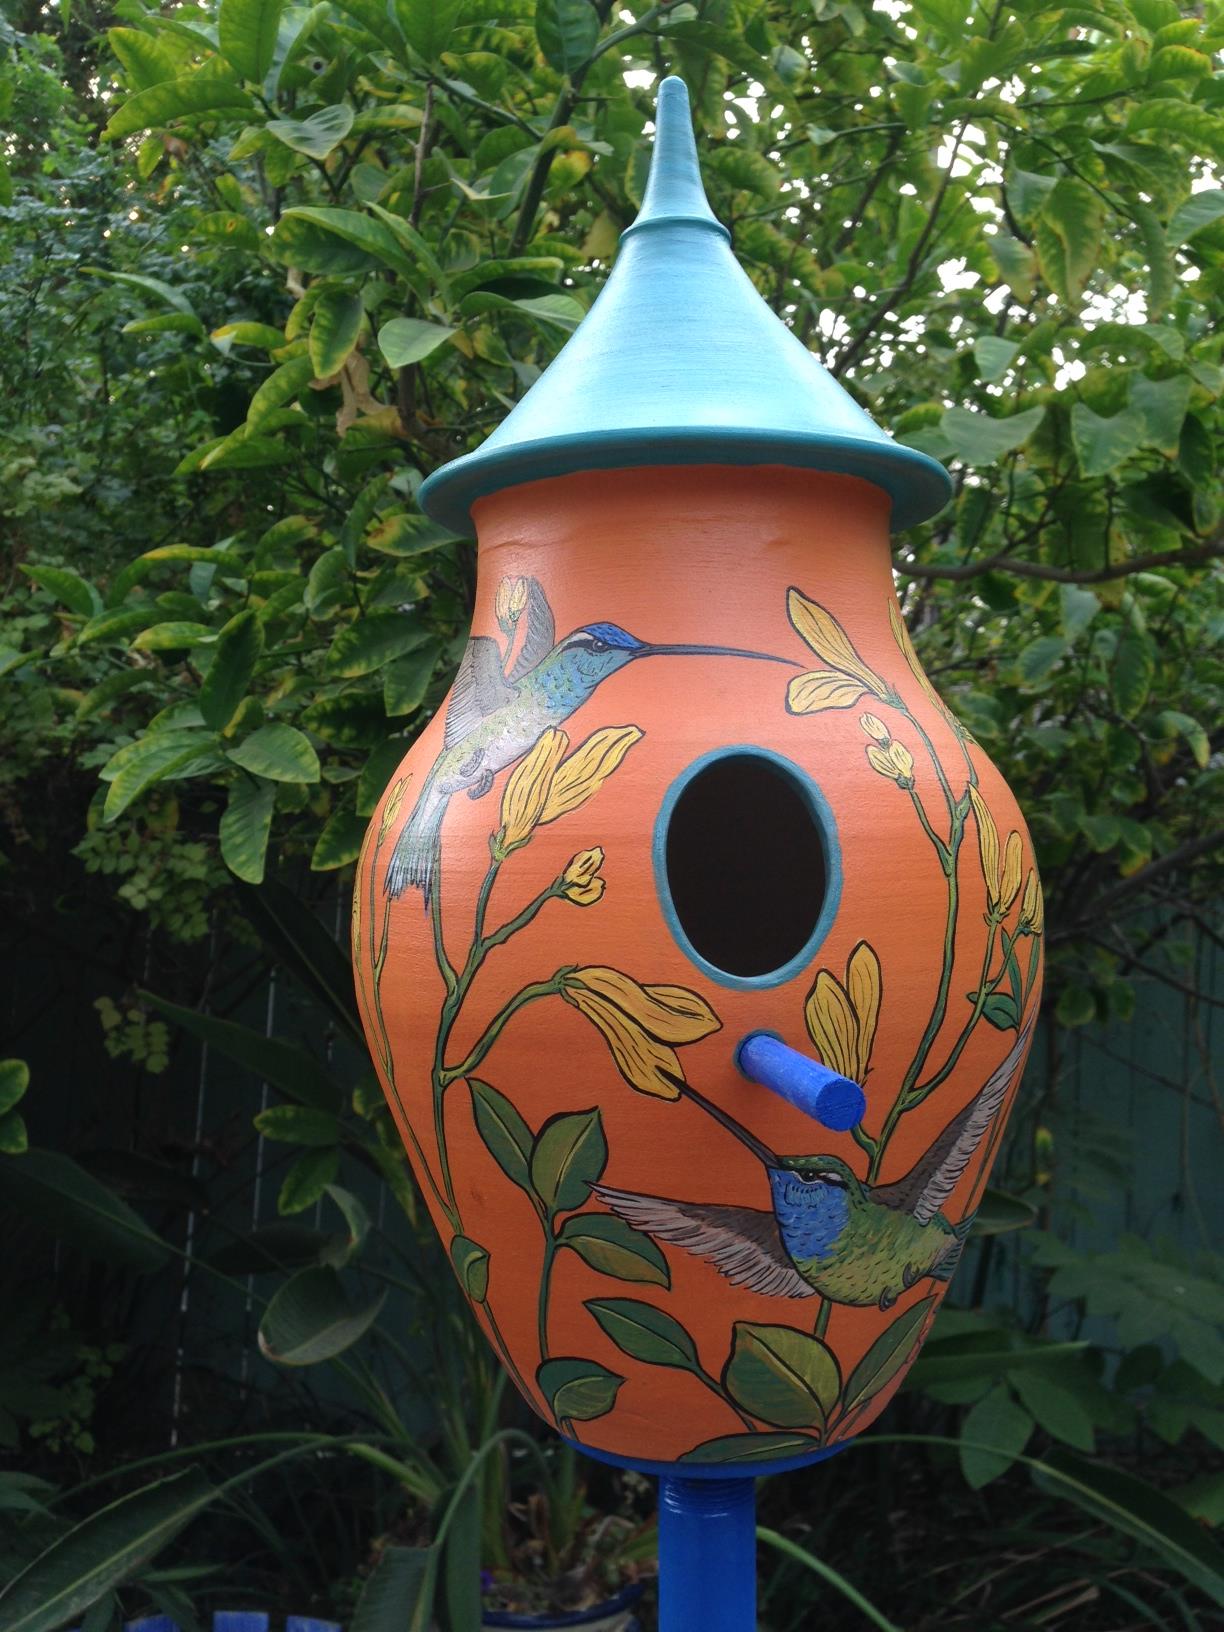 Colorful Ceramic Birdhouse with Humminbird Design